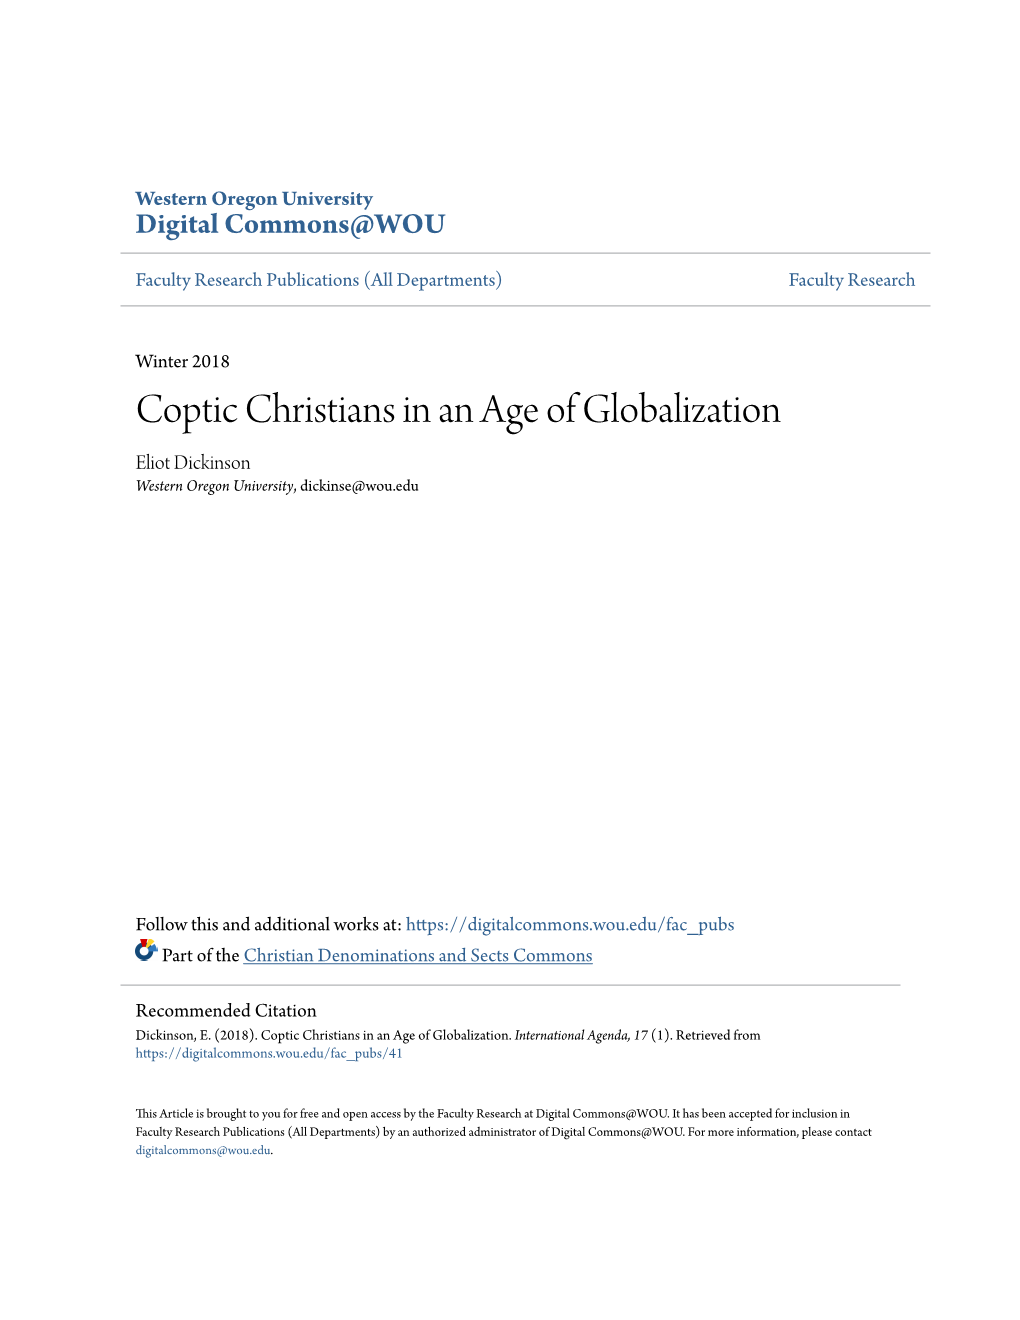 Coptic Christians in an Age of Globalization Eliot Dickinson Western Oregon University, Dickinse@Wou.Edu